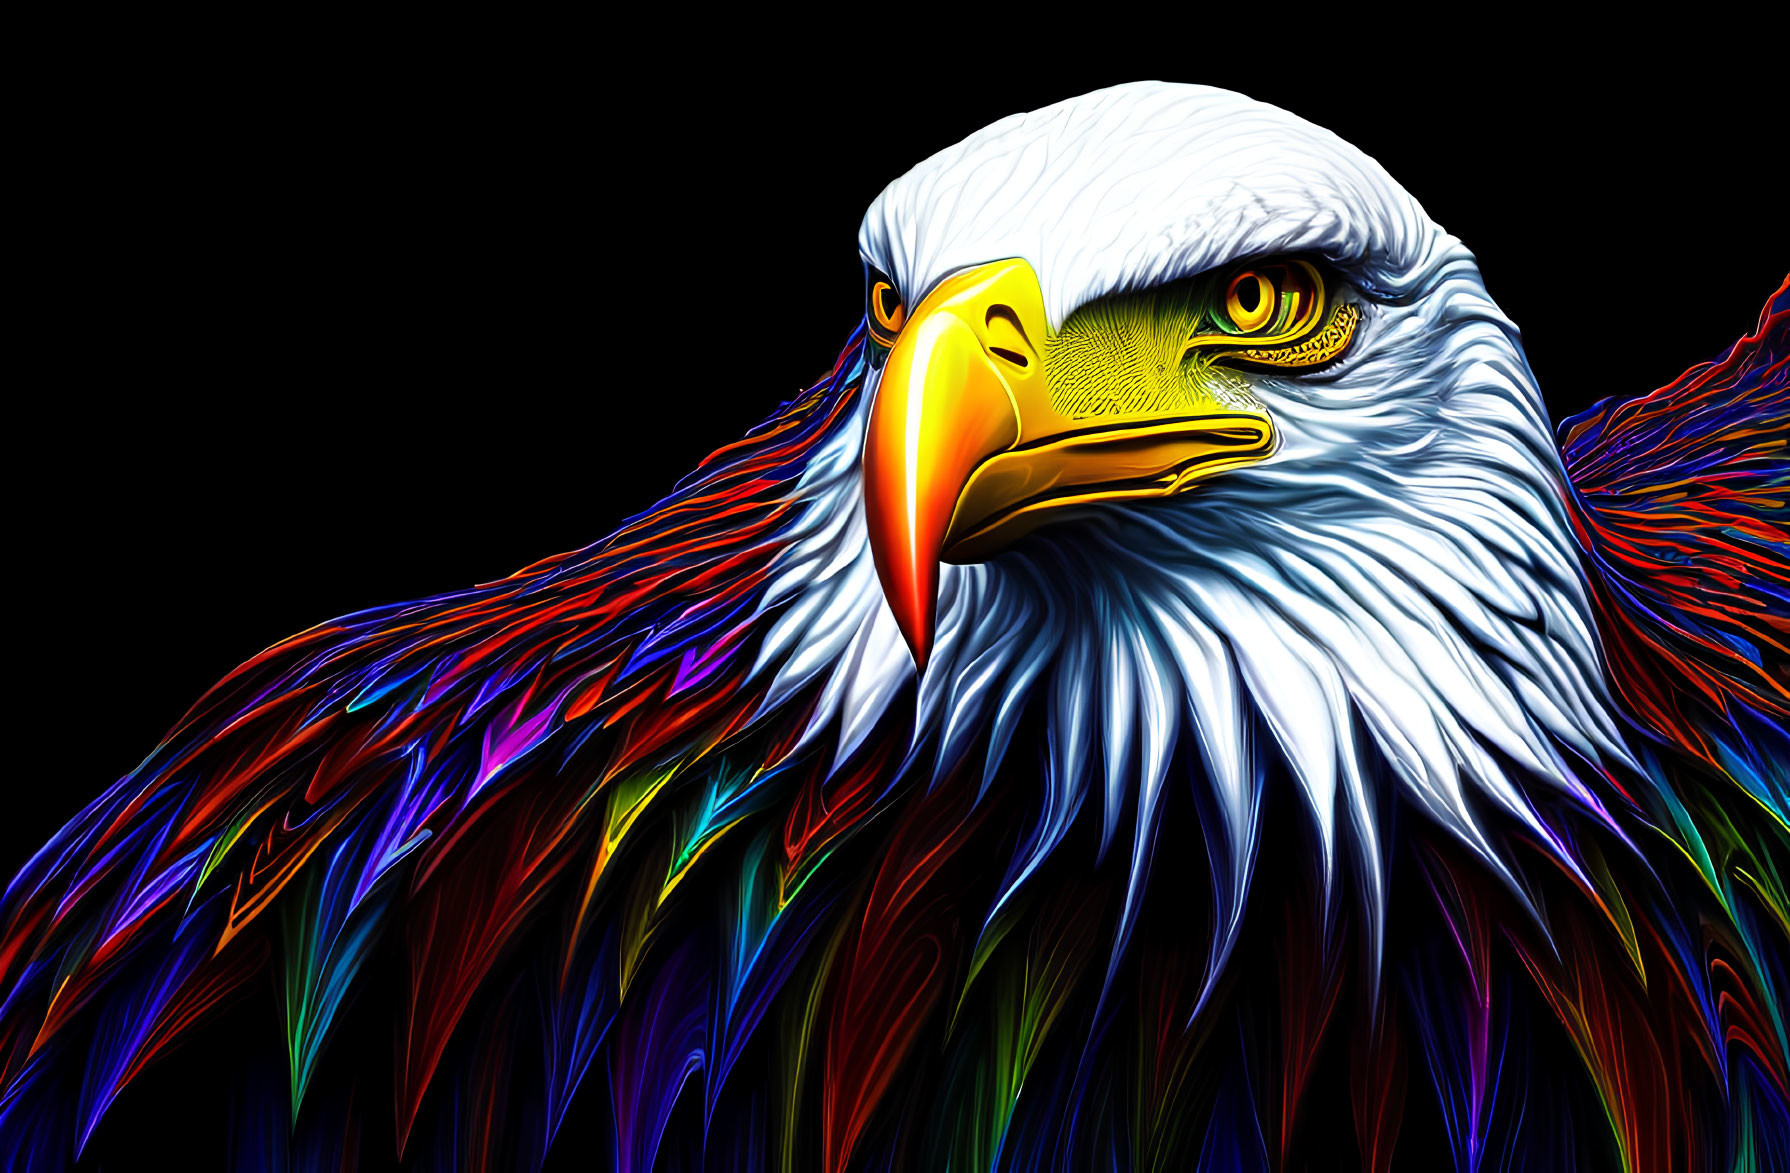 Detailed Bald Eagle Digital Artwork with Multicolored Plumage